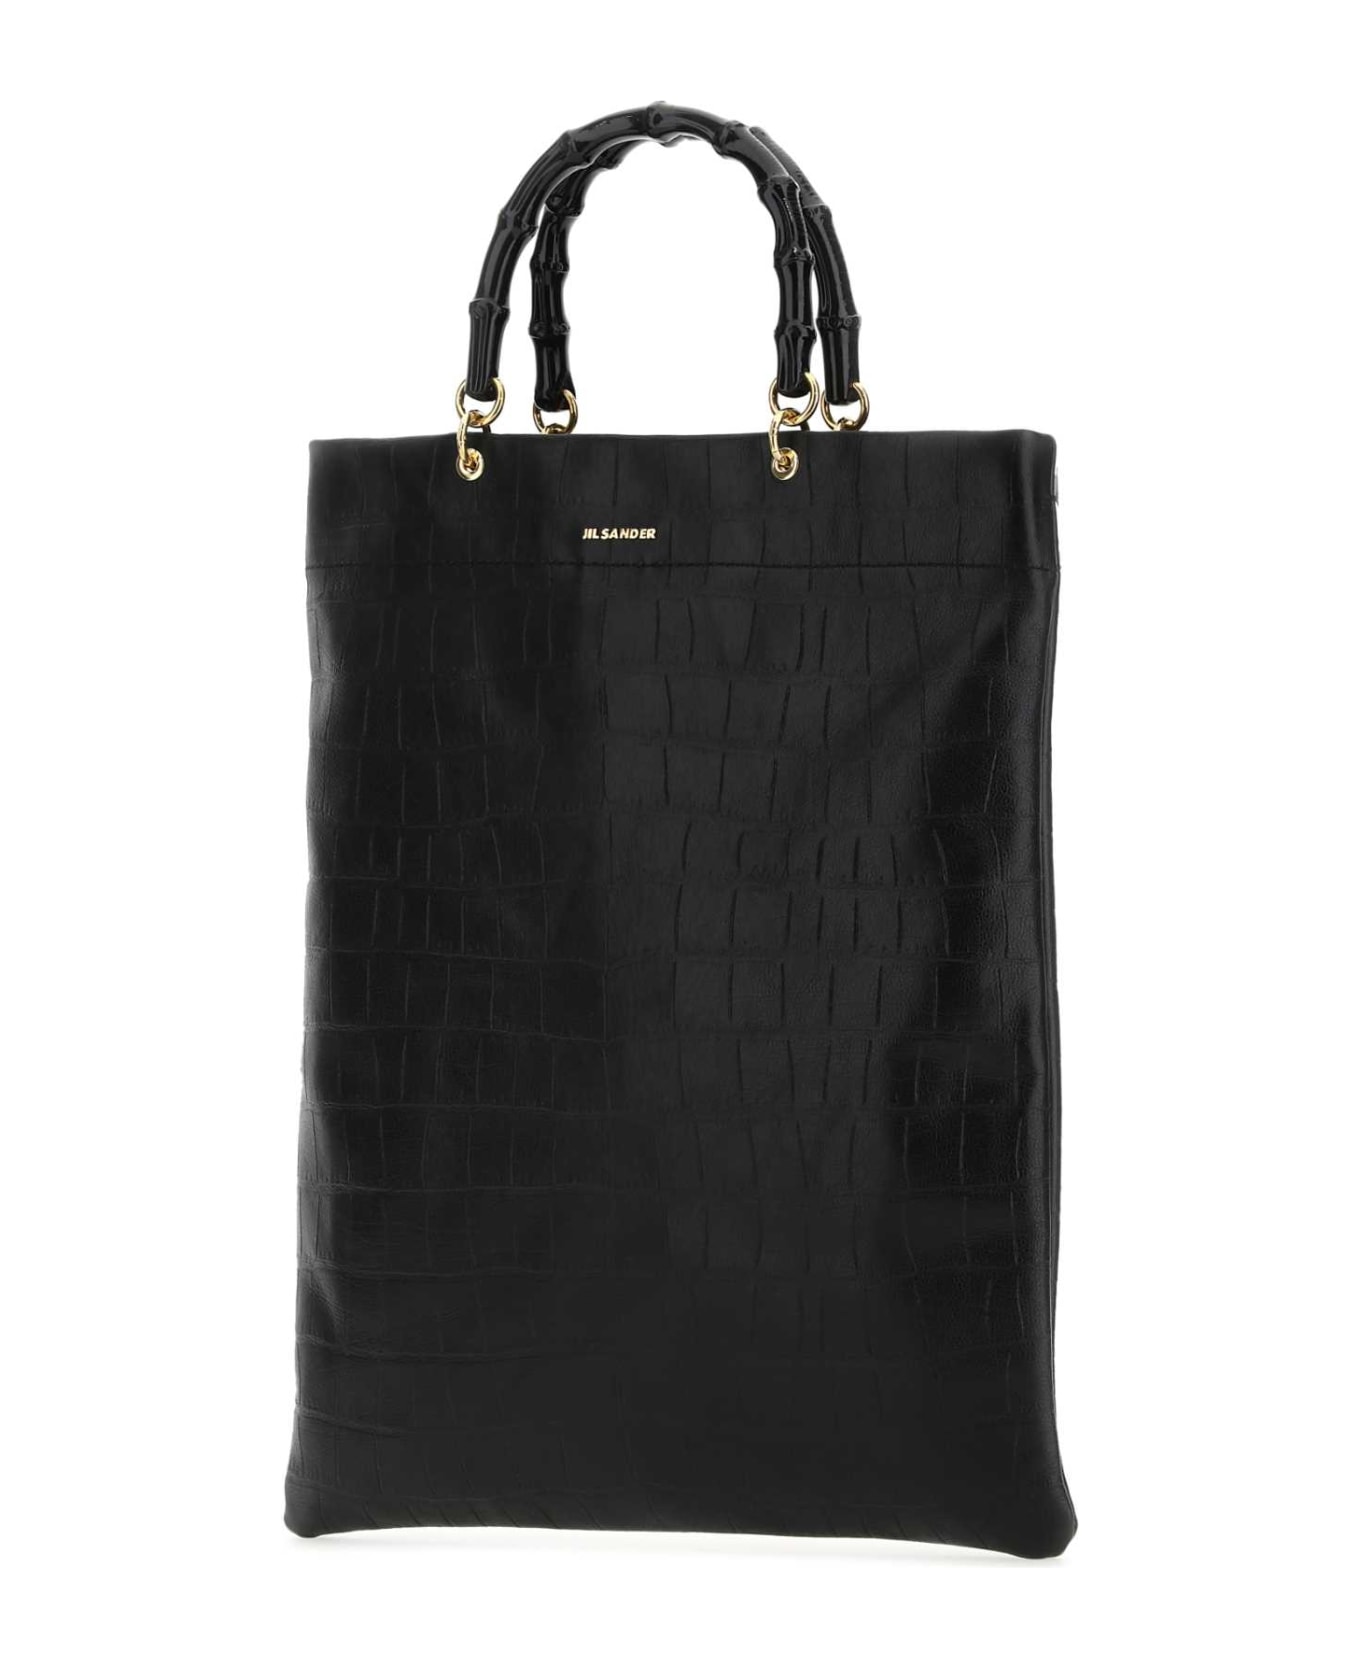 Jil Sander Black Leather Medium Shopping Bag - 001 トートバッグ